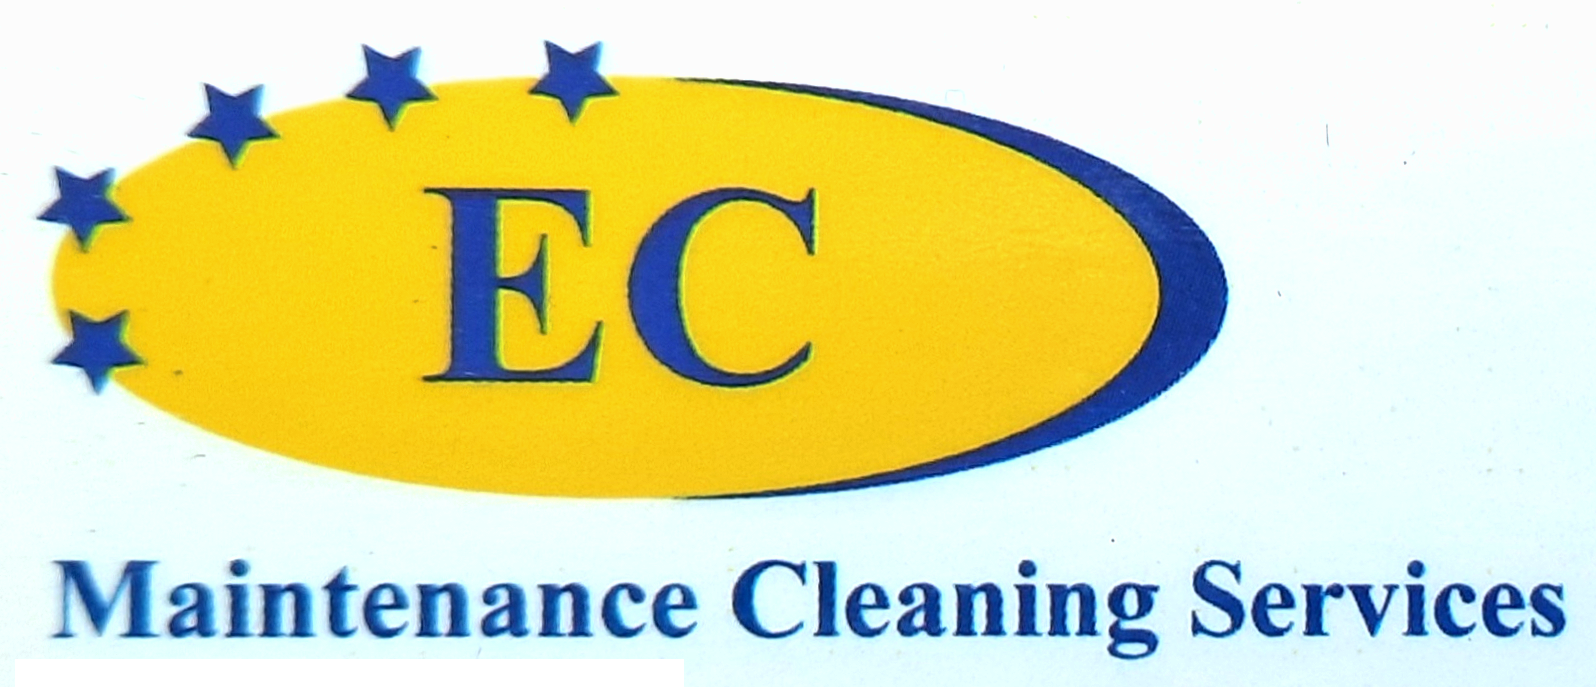 EC Maintenance Cleaning